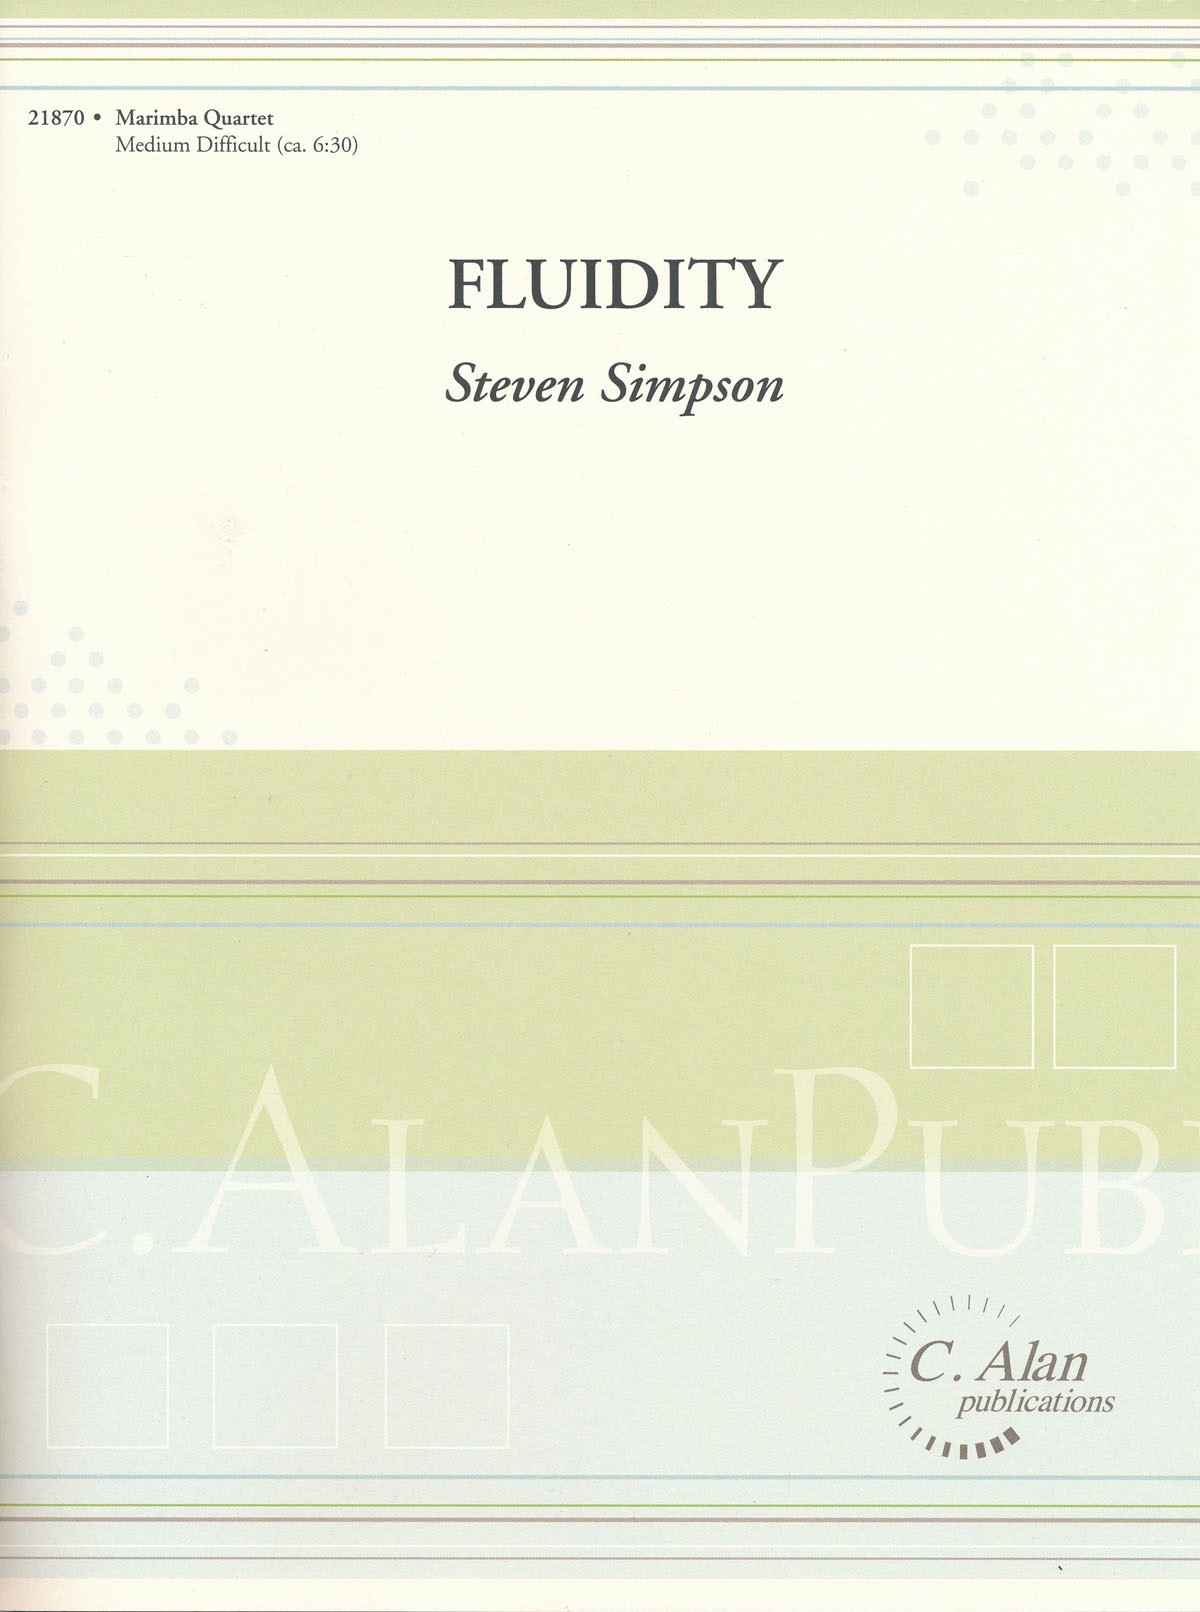 Fluidity by Steven Simpson